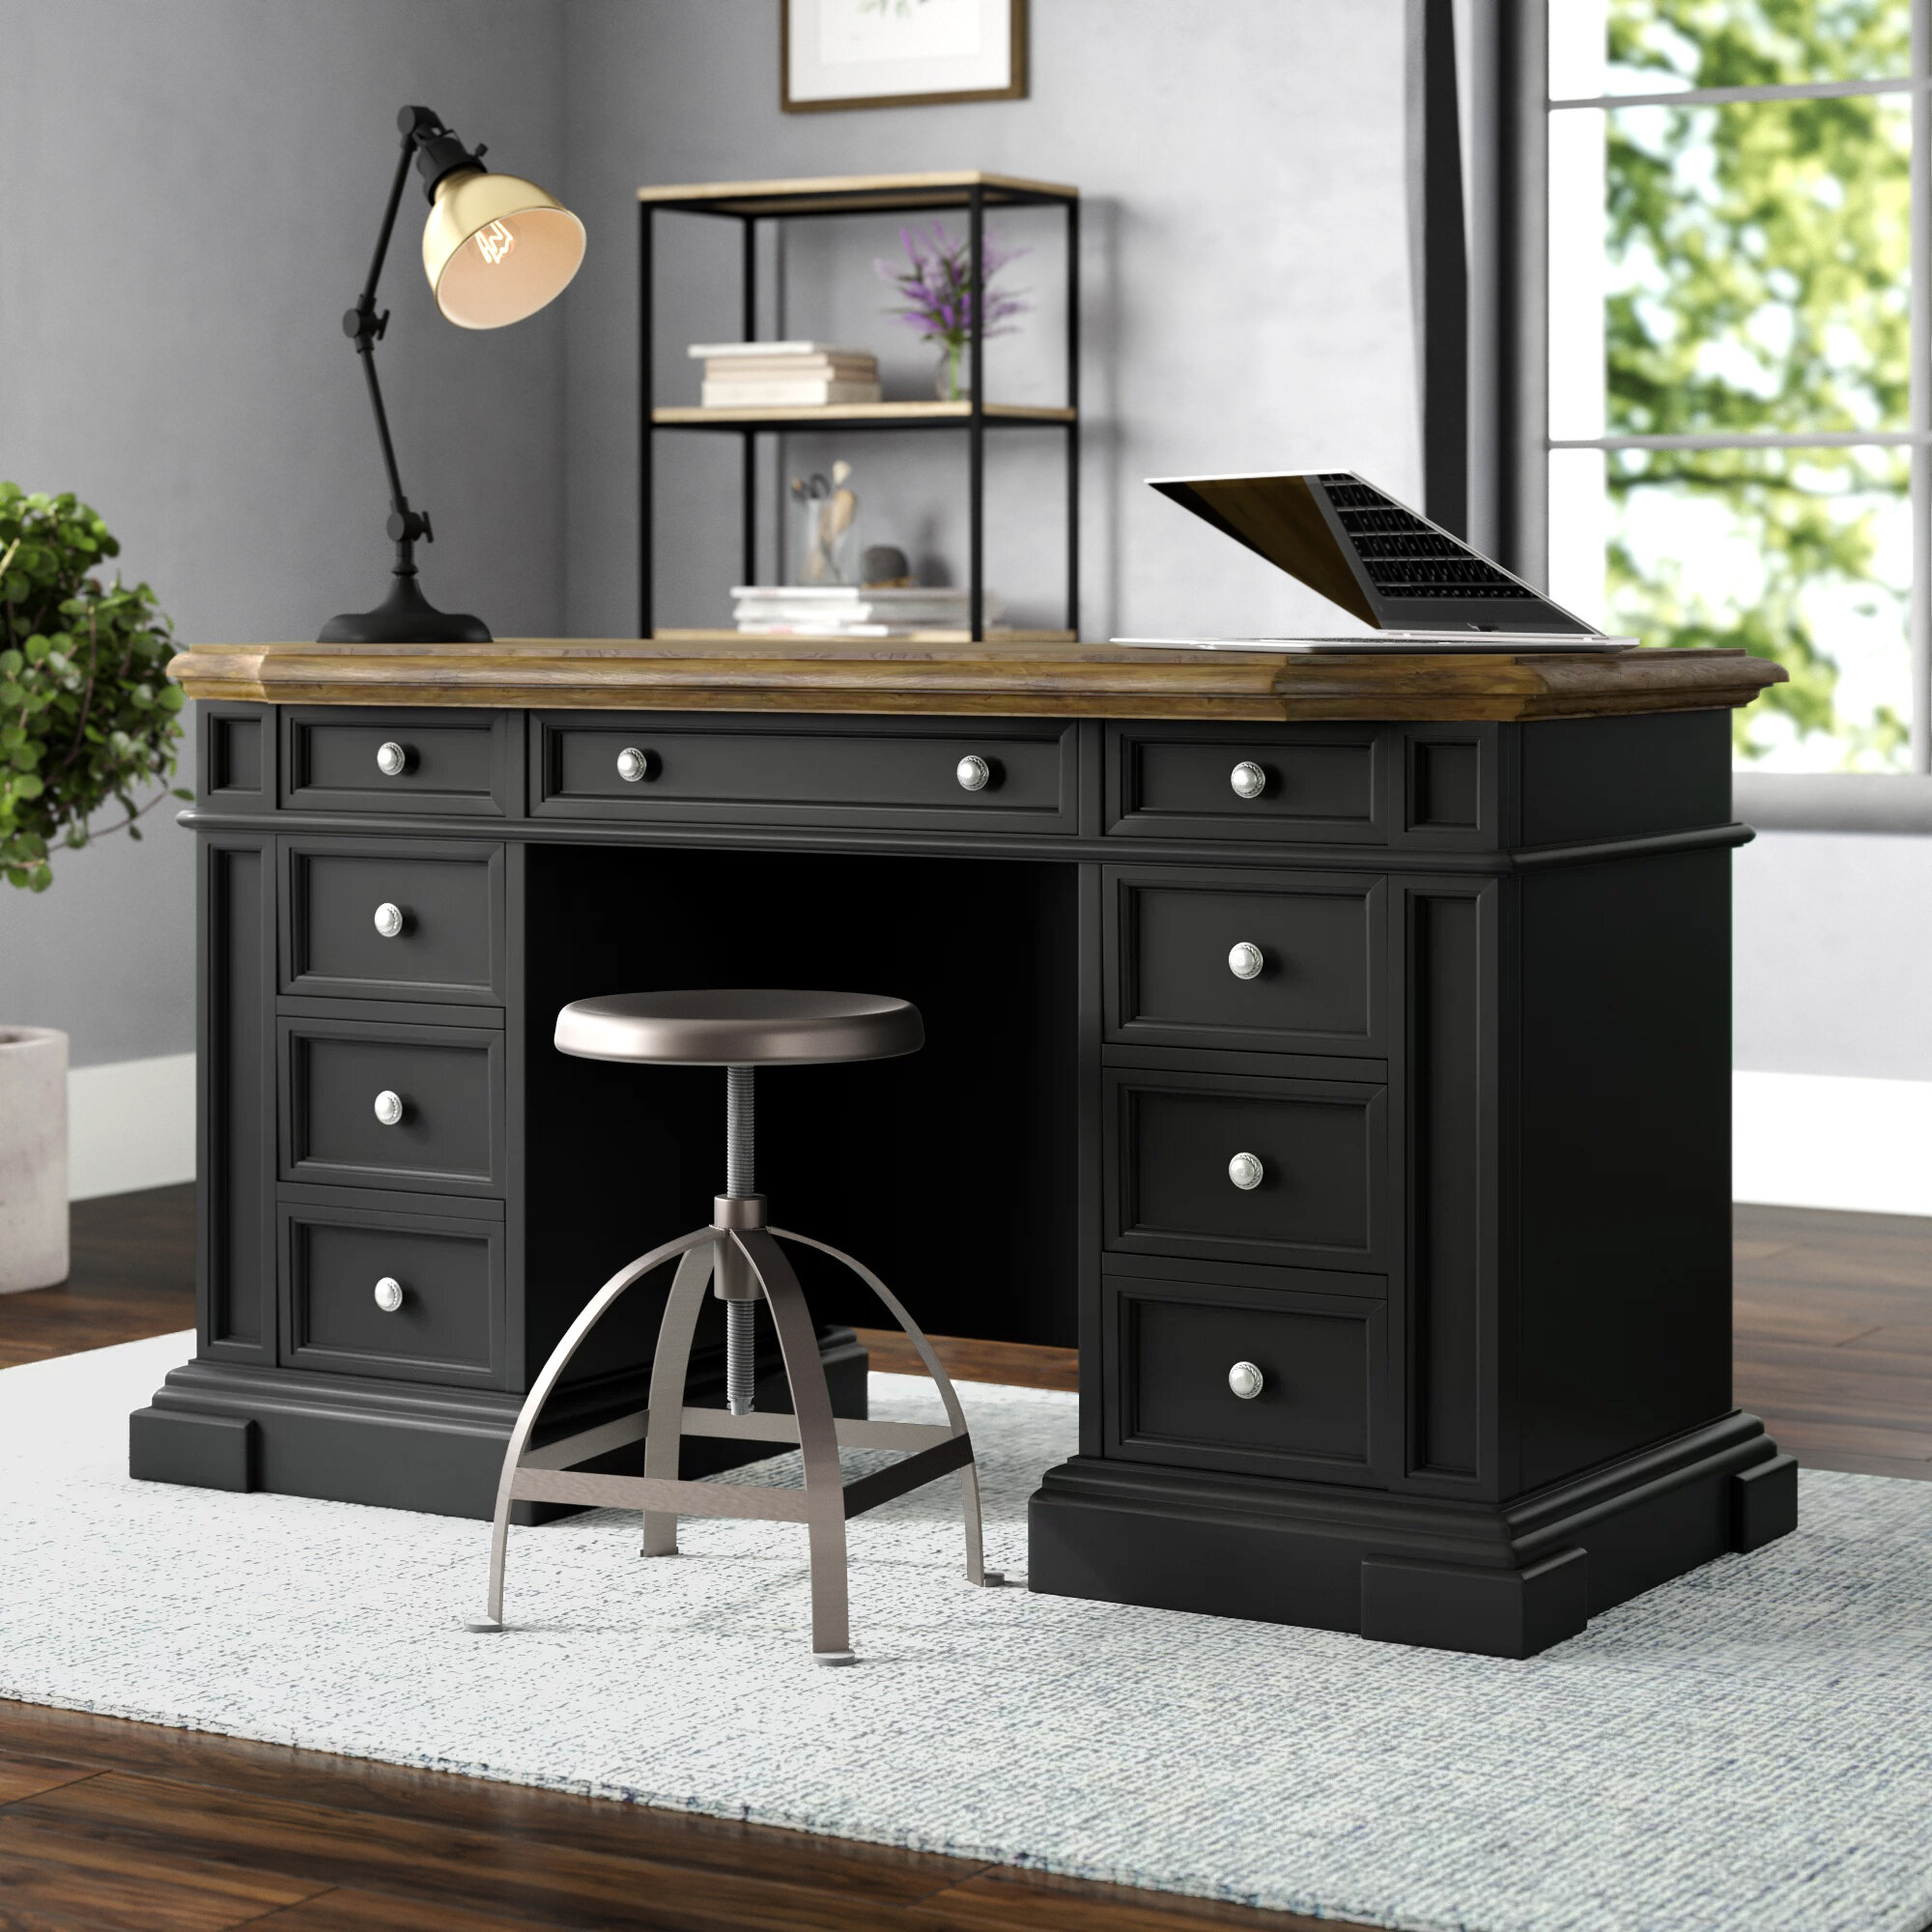 August Grove Collette Solid Wood Desk Reviews Wayfair